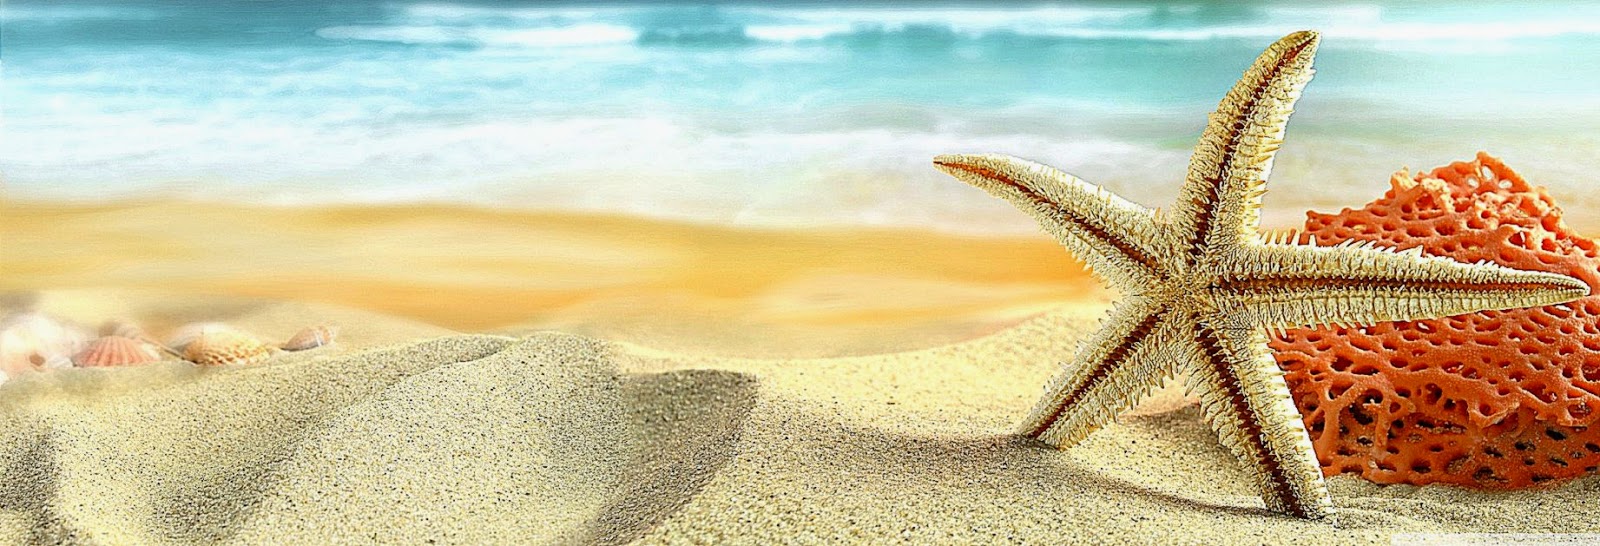 Beach Starfish Desktop Wallpaper Gallery